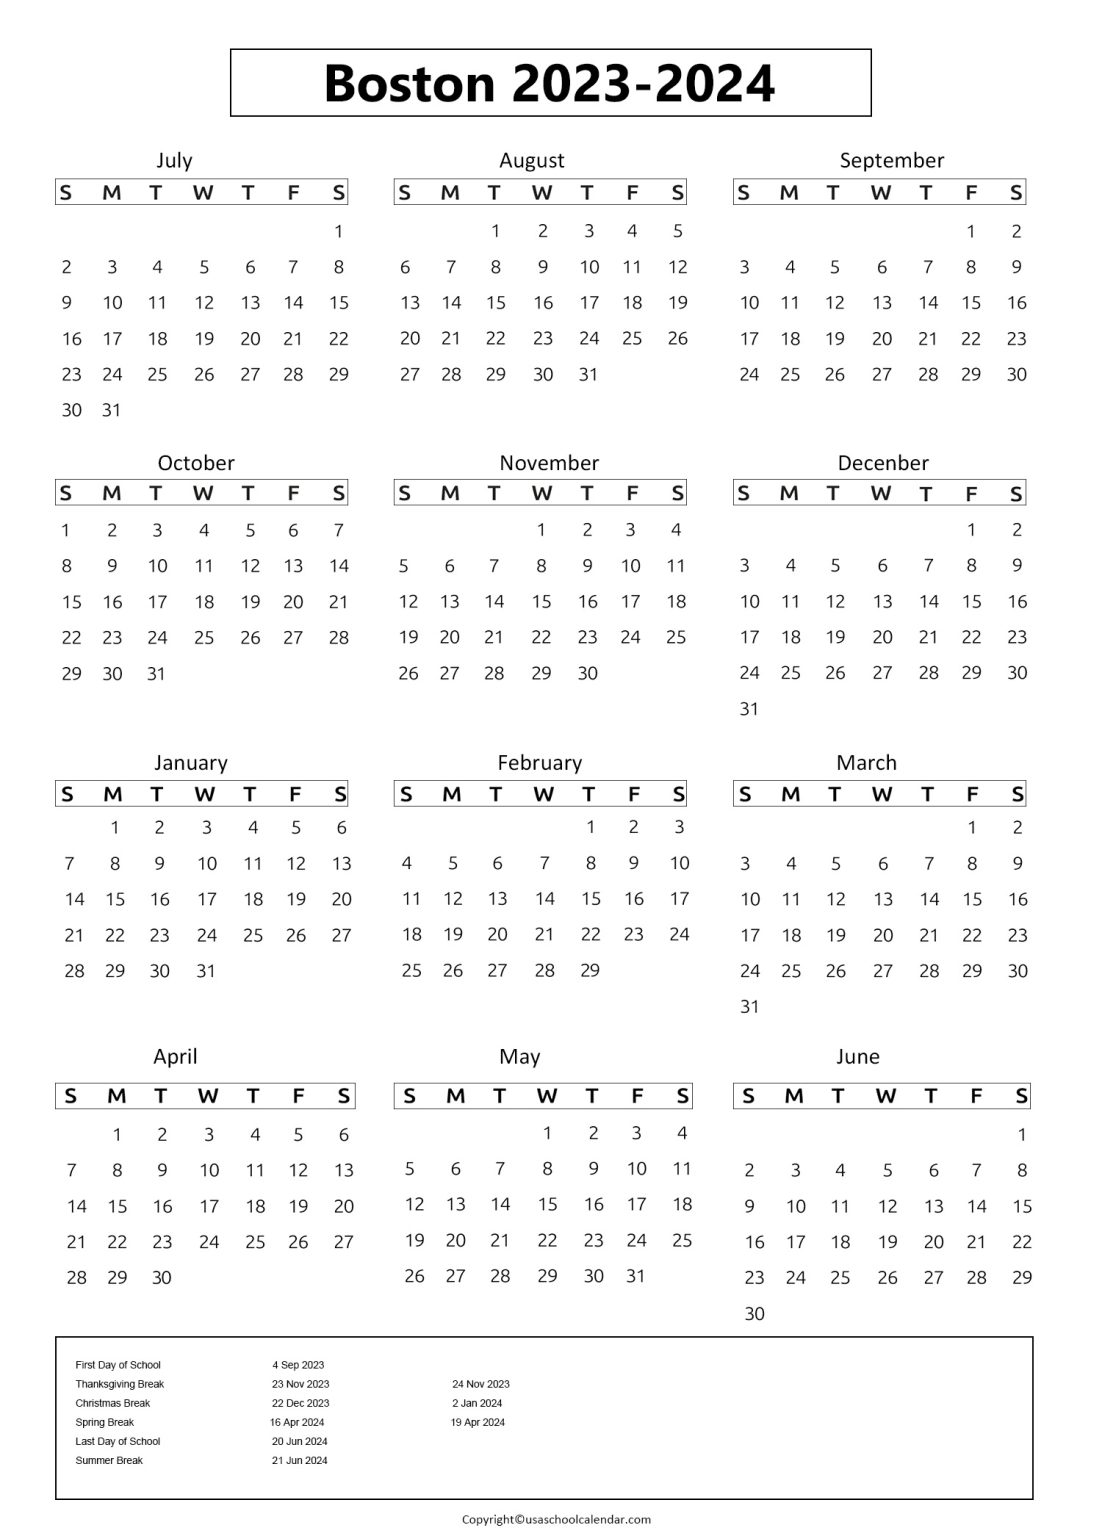 Boston Public Schools Calendar & Holidays 20232024